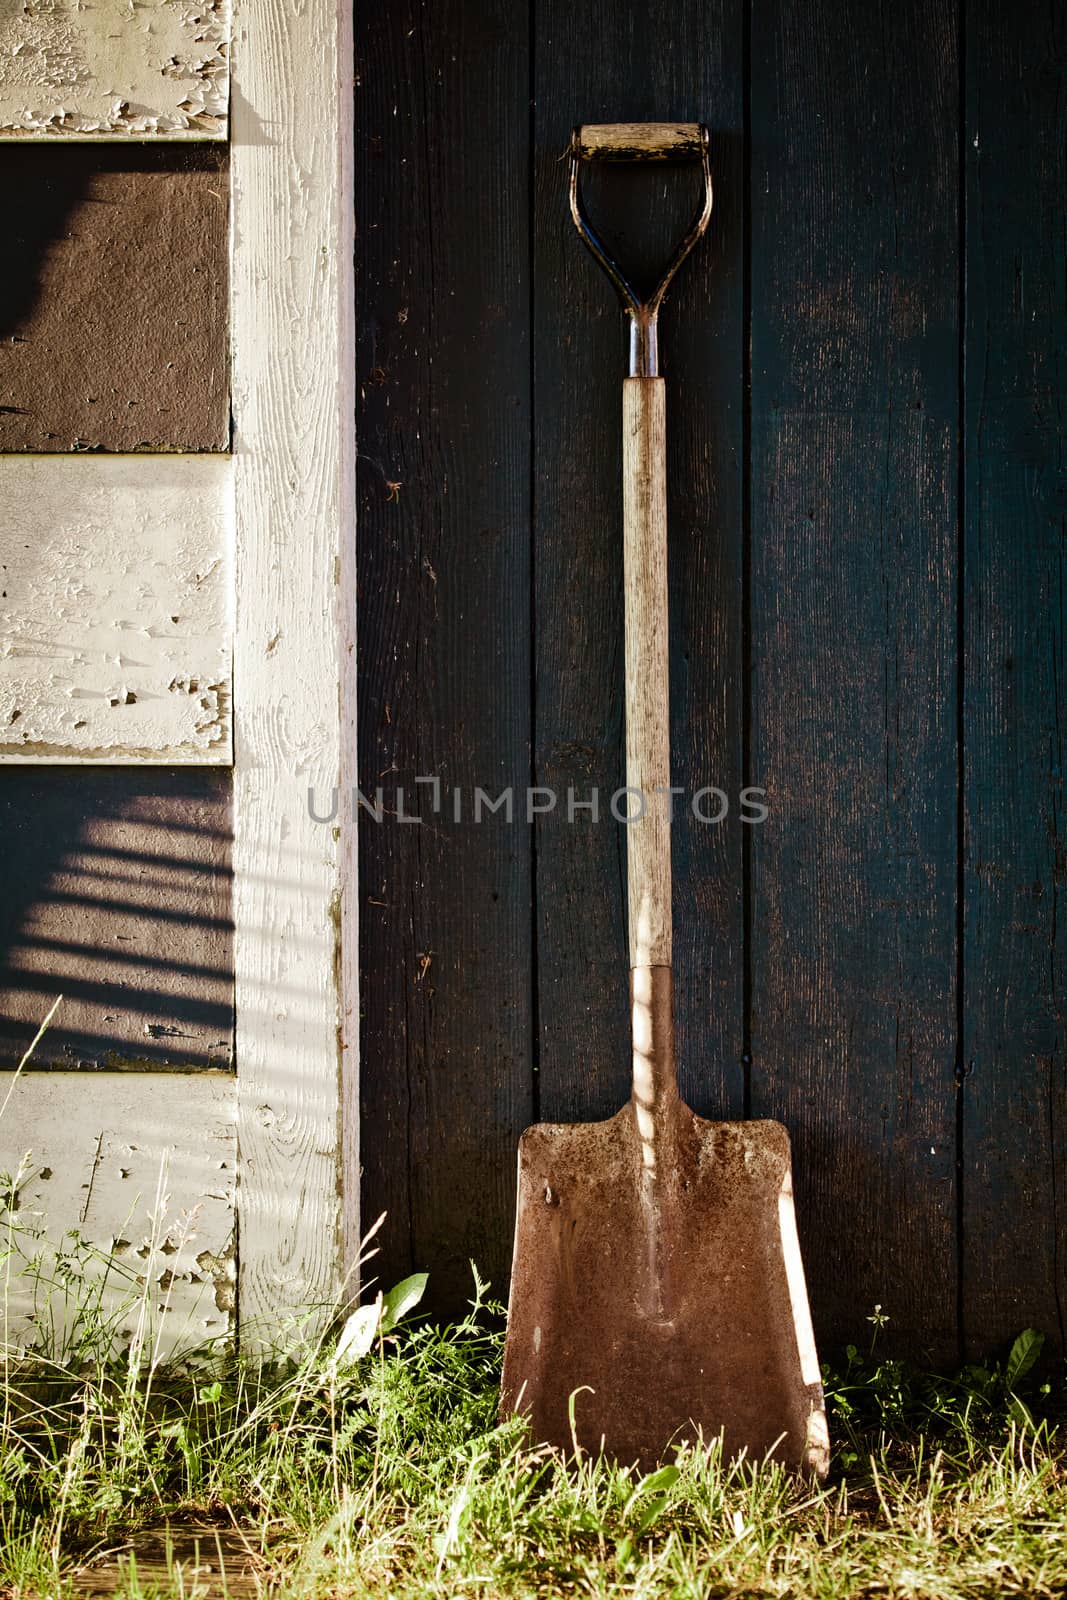 Old Vintage Metal Shovel with rust on blue barn Door. Desaturated image